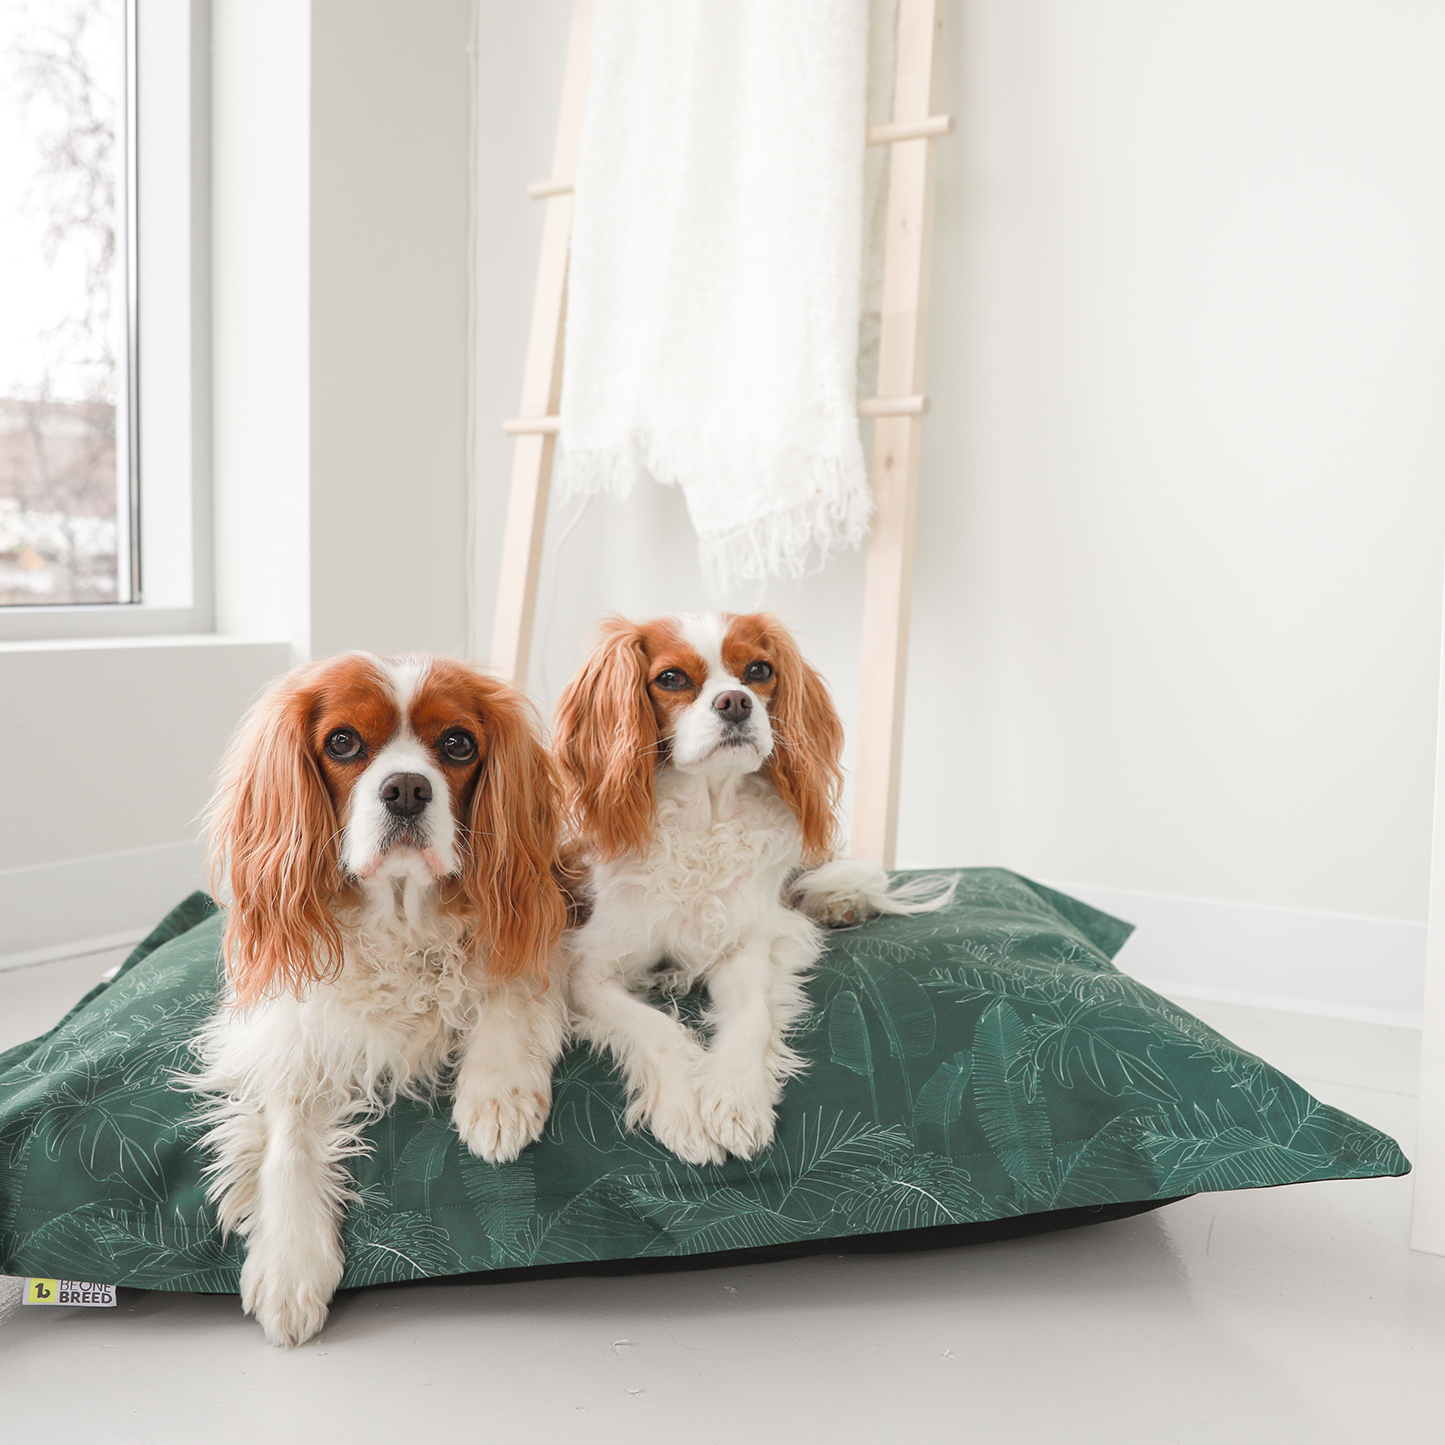 Memory foam dog bed, greenery style